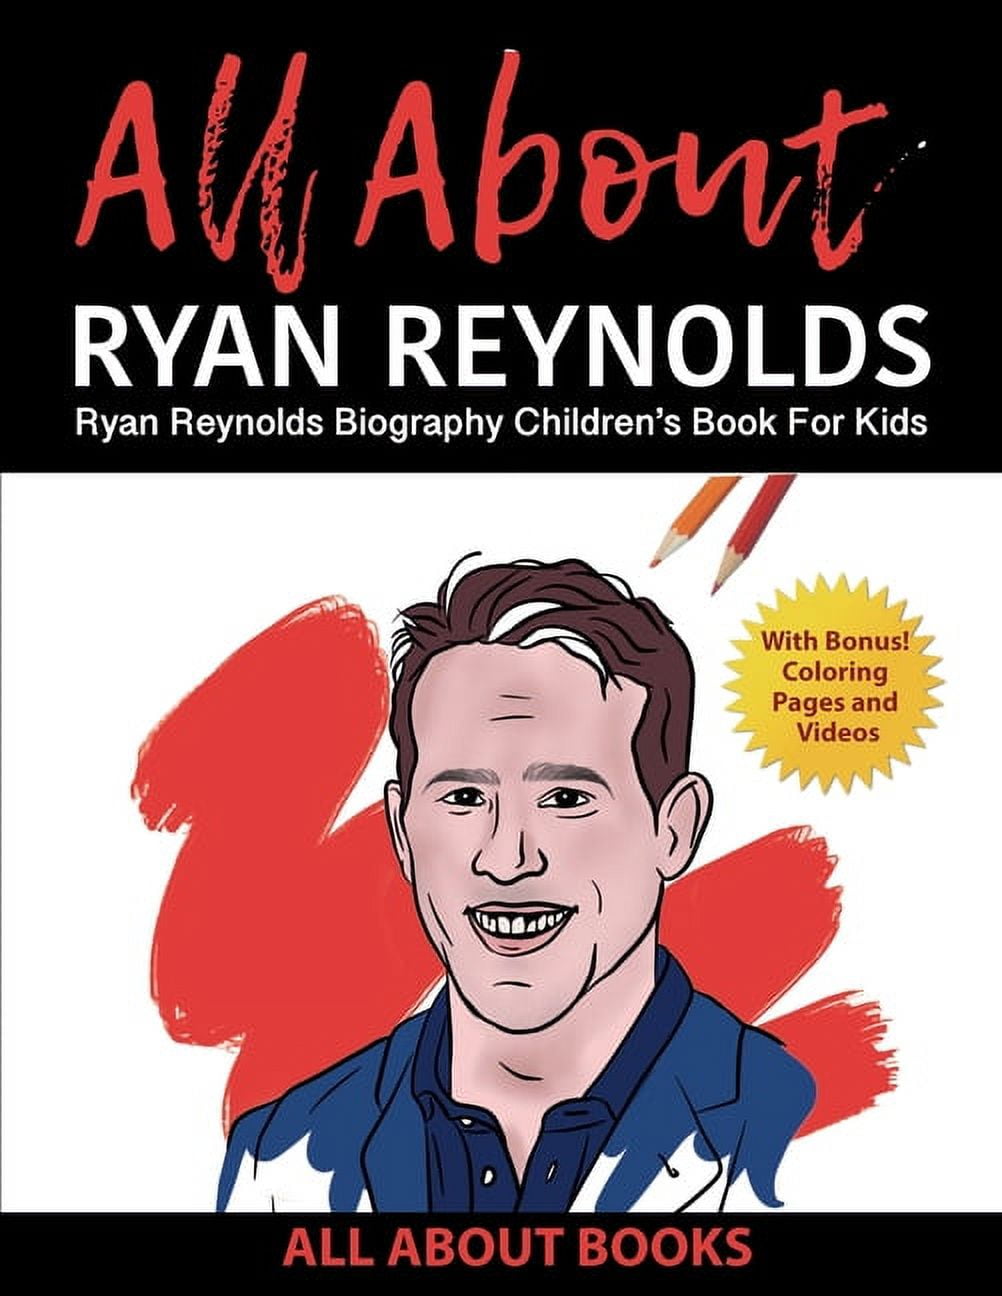 Ryan Reynolds Gifts & Merchandise for Sale